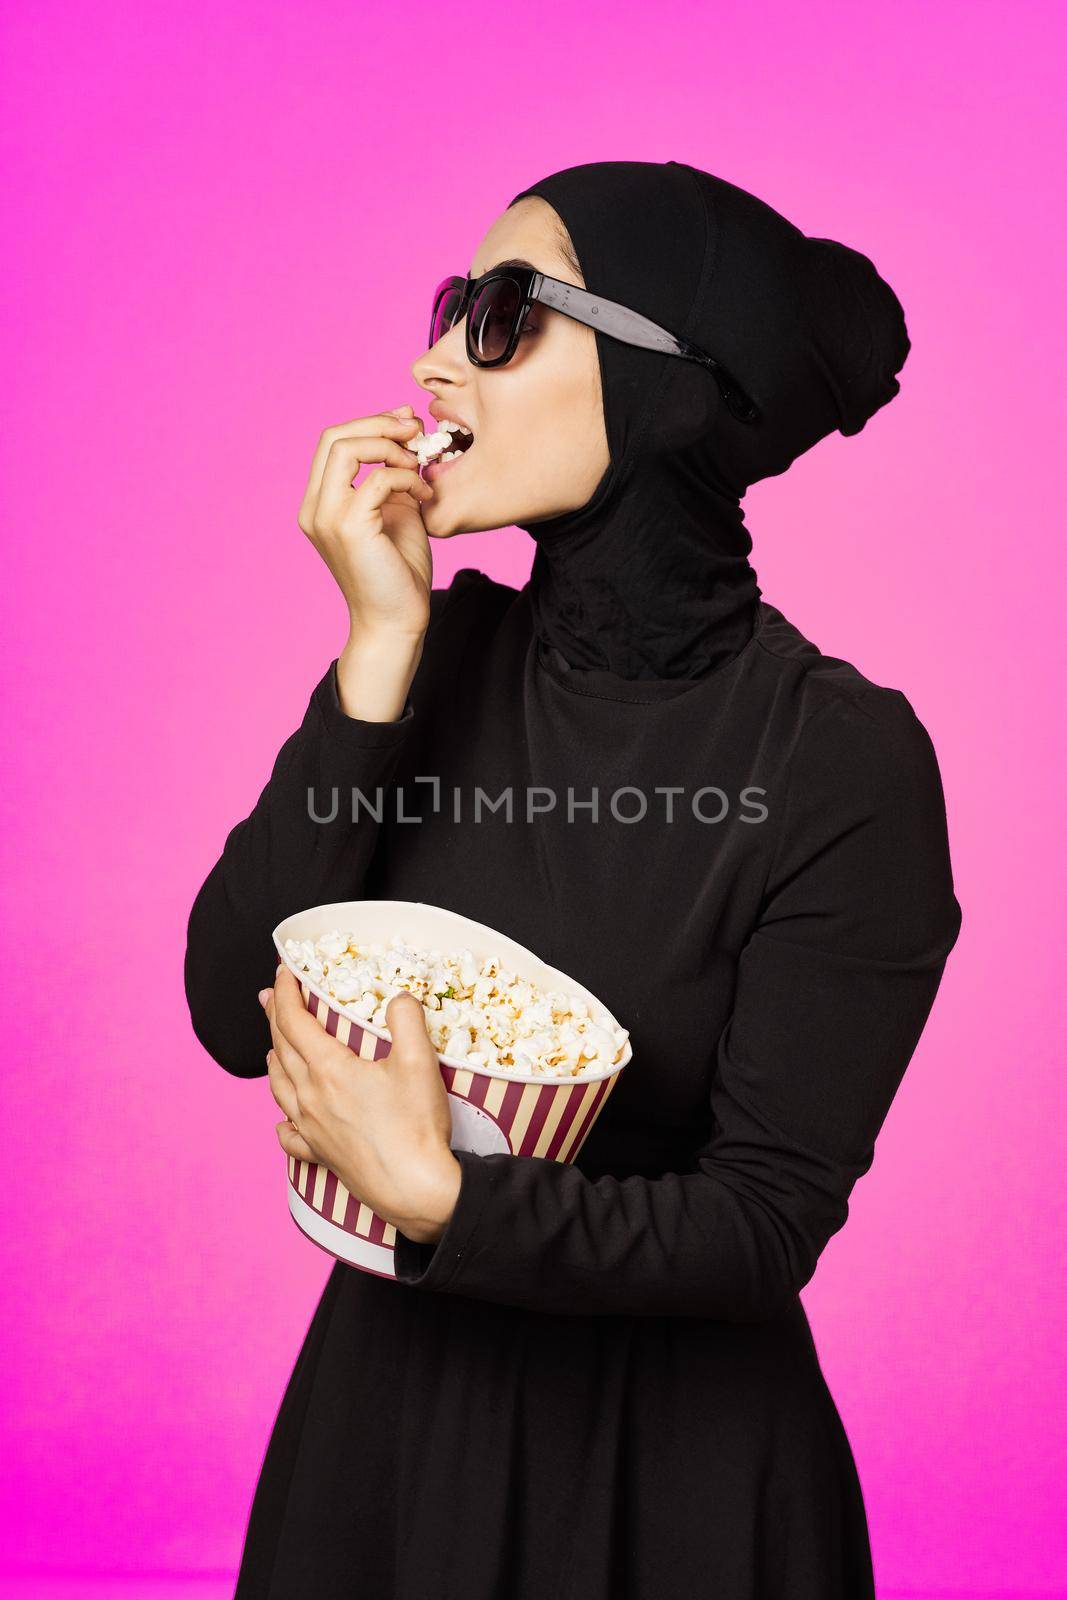 arab woman fun popcorn entertainment fashion isolated background by Vichizh